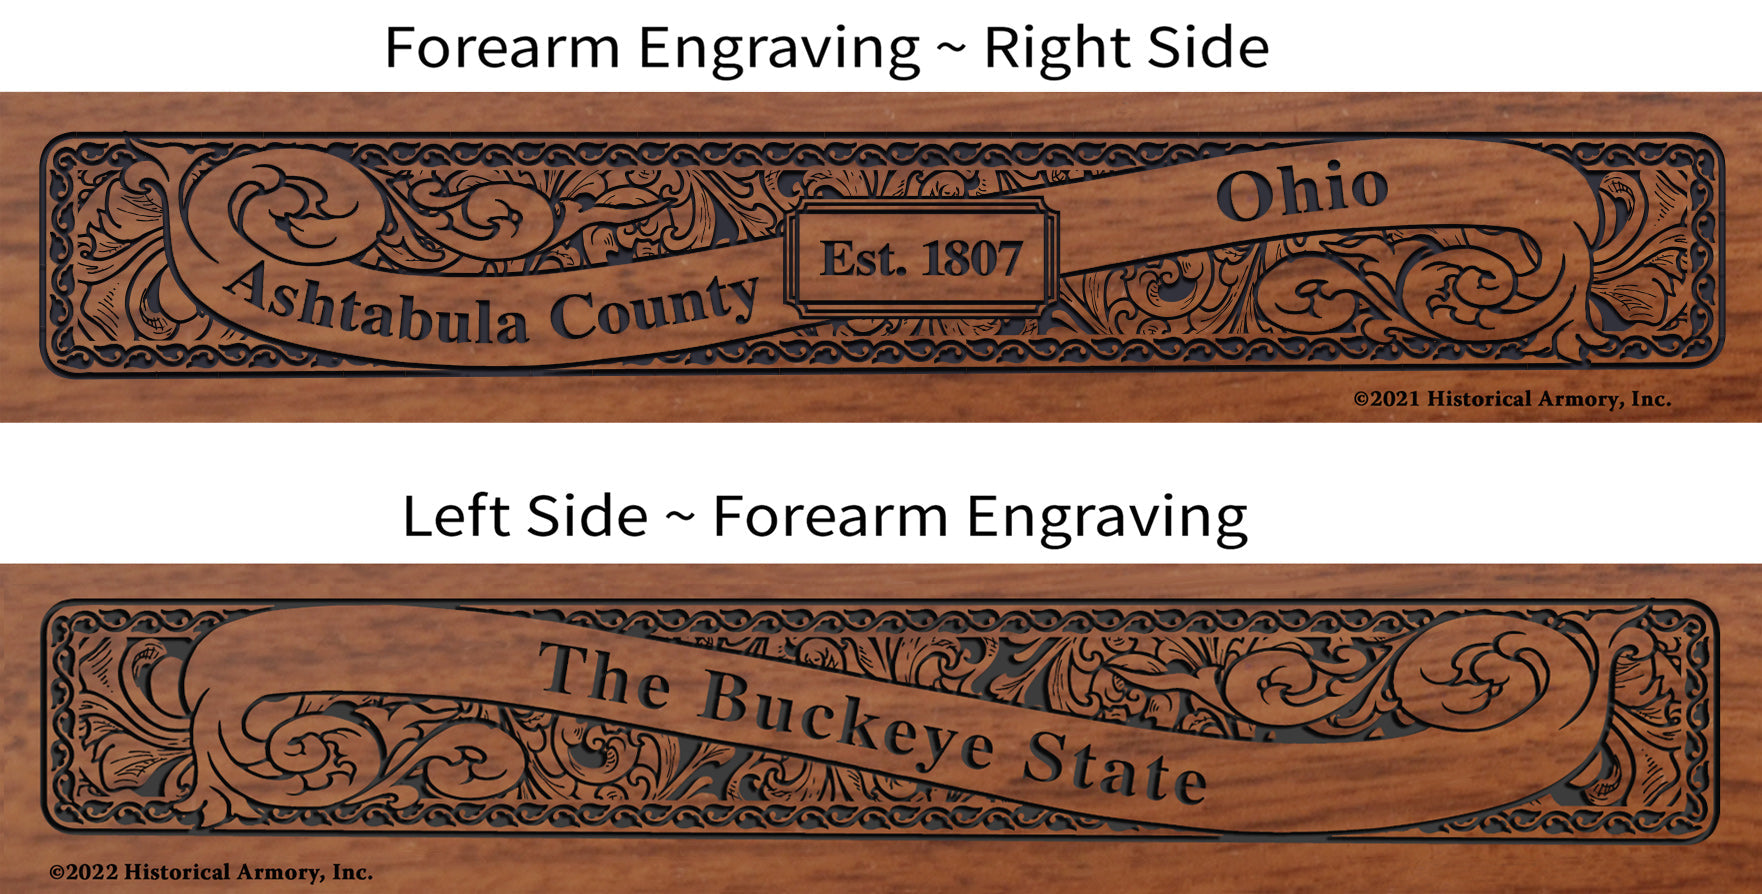 Ashtabula County Ohio Engraved Rifle Forearm